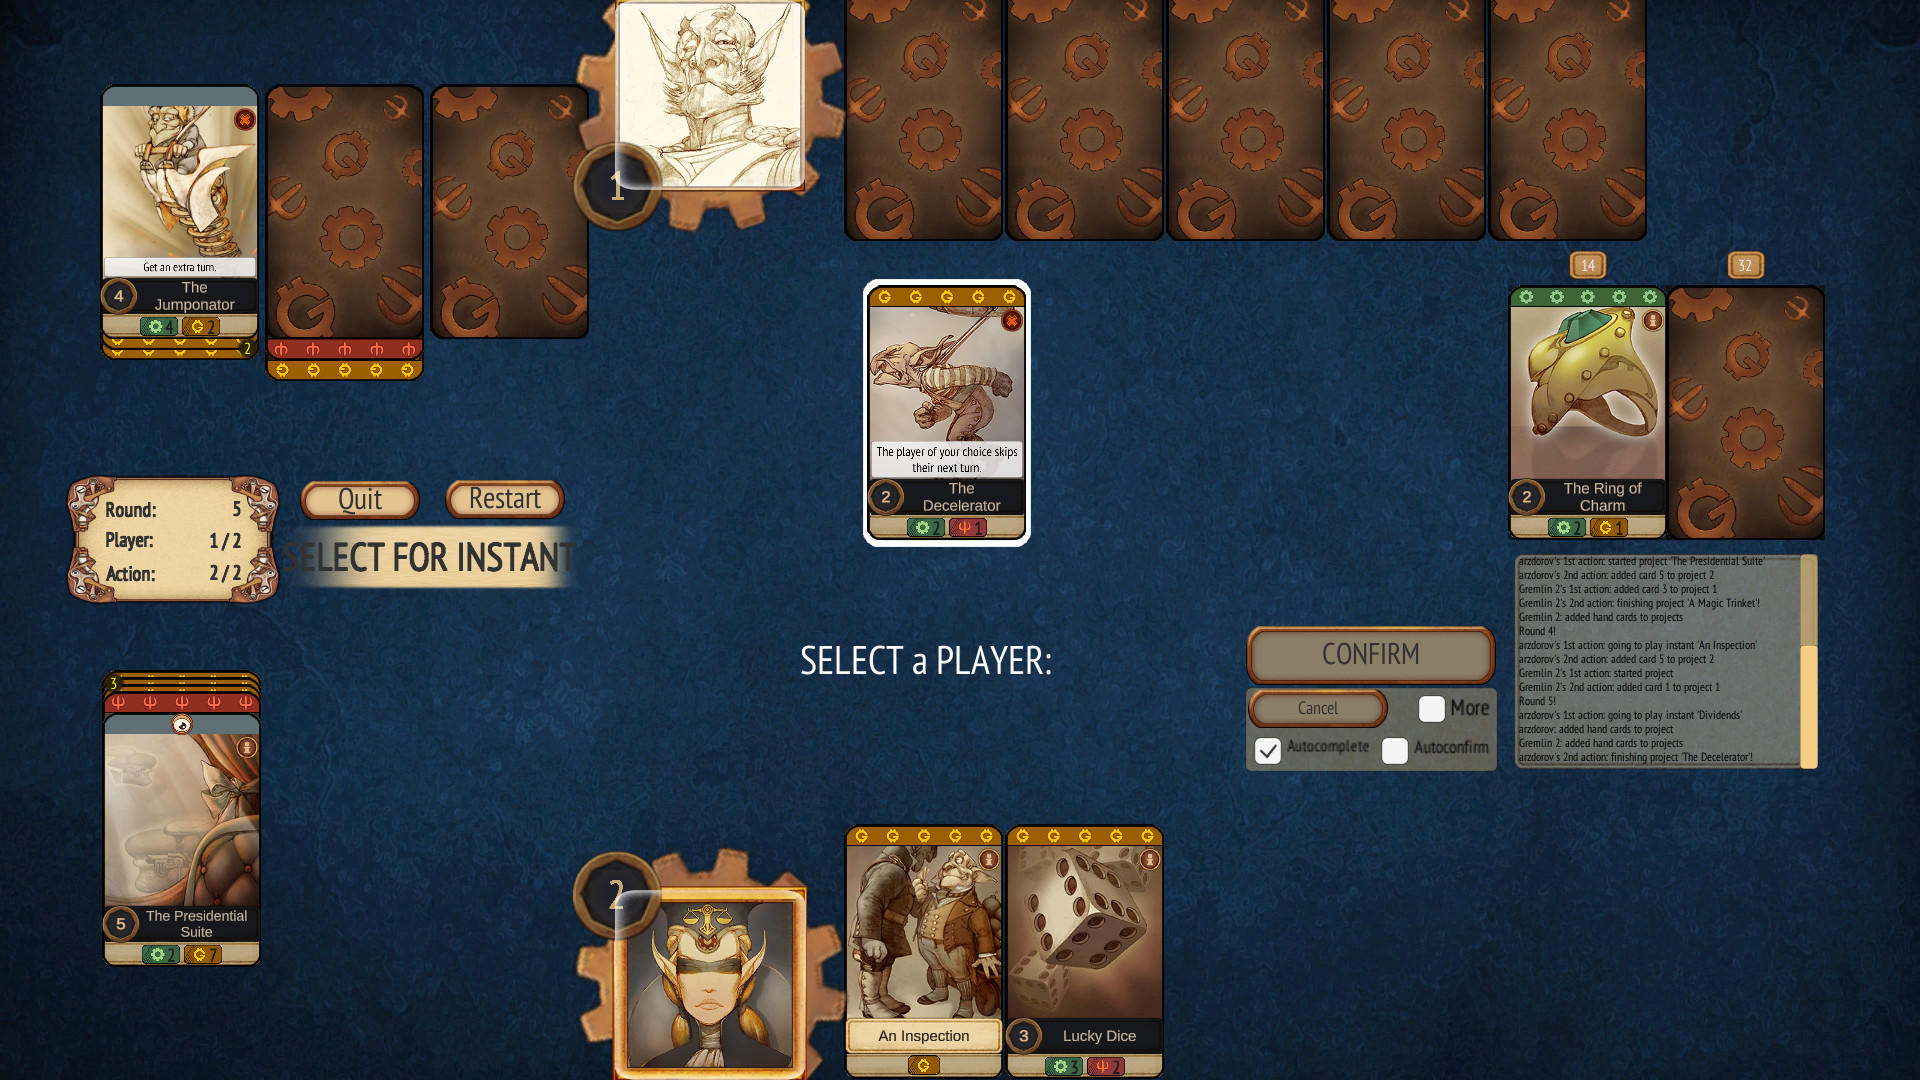 Screenshot of Gremlins, Inc. – Card Game